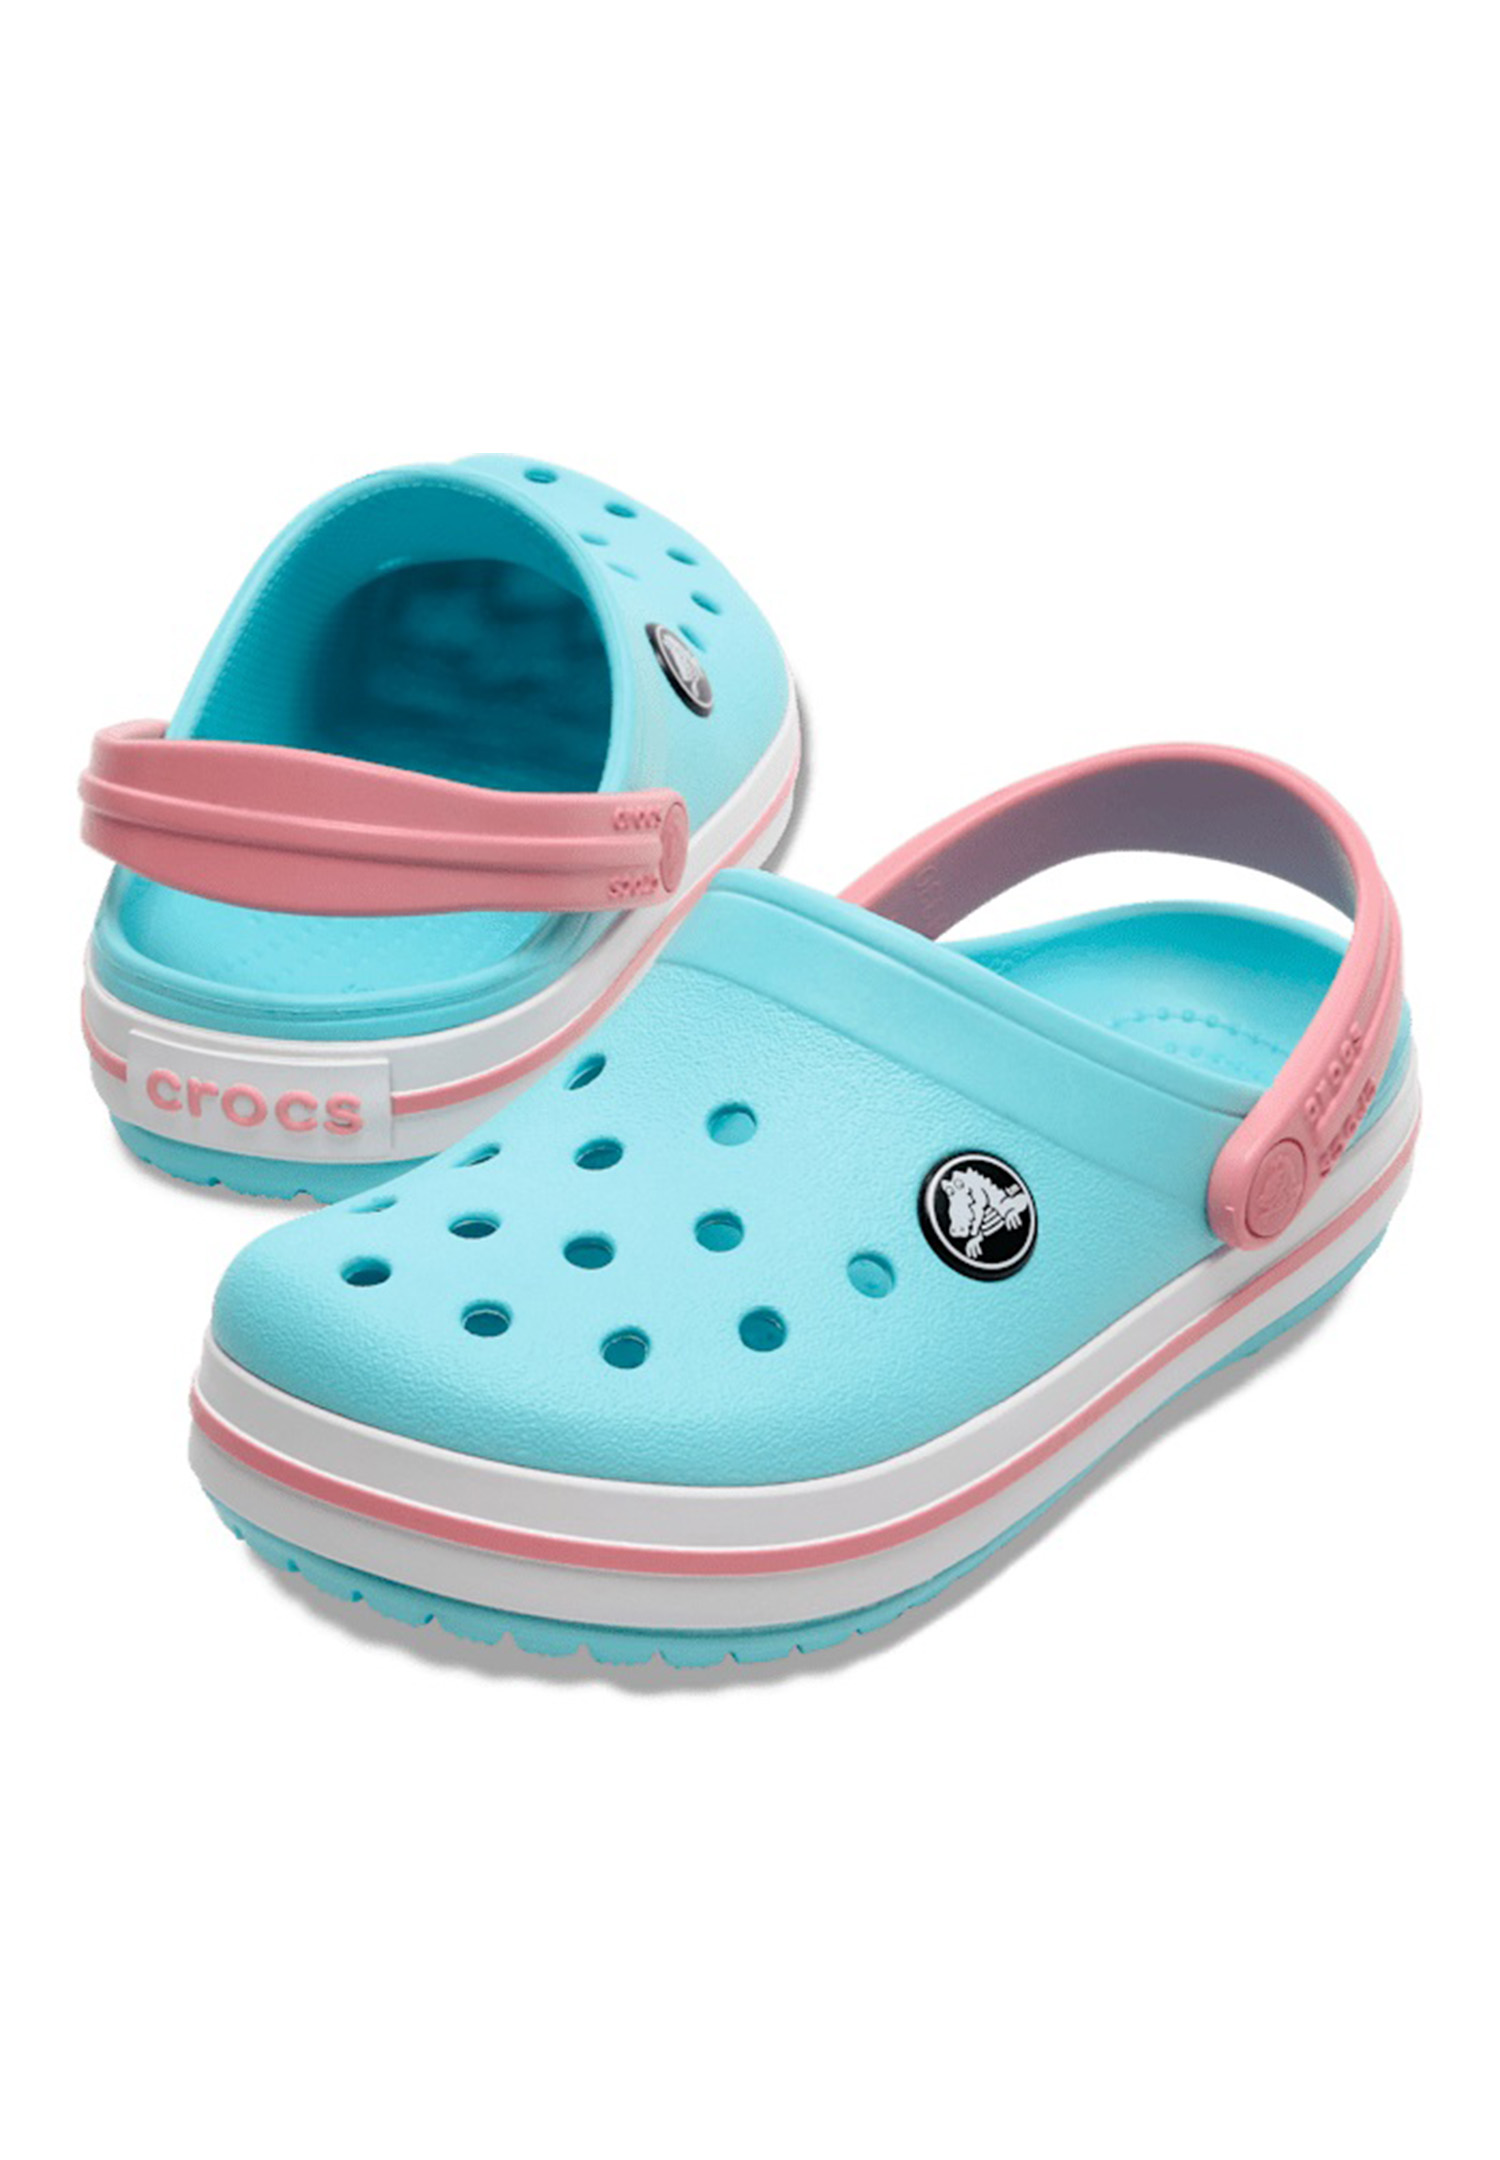 Crocs Kids Crocband Clog Unisex Kinder Schuhe Sandalen 207006 Türkis von Crocs